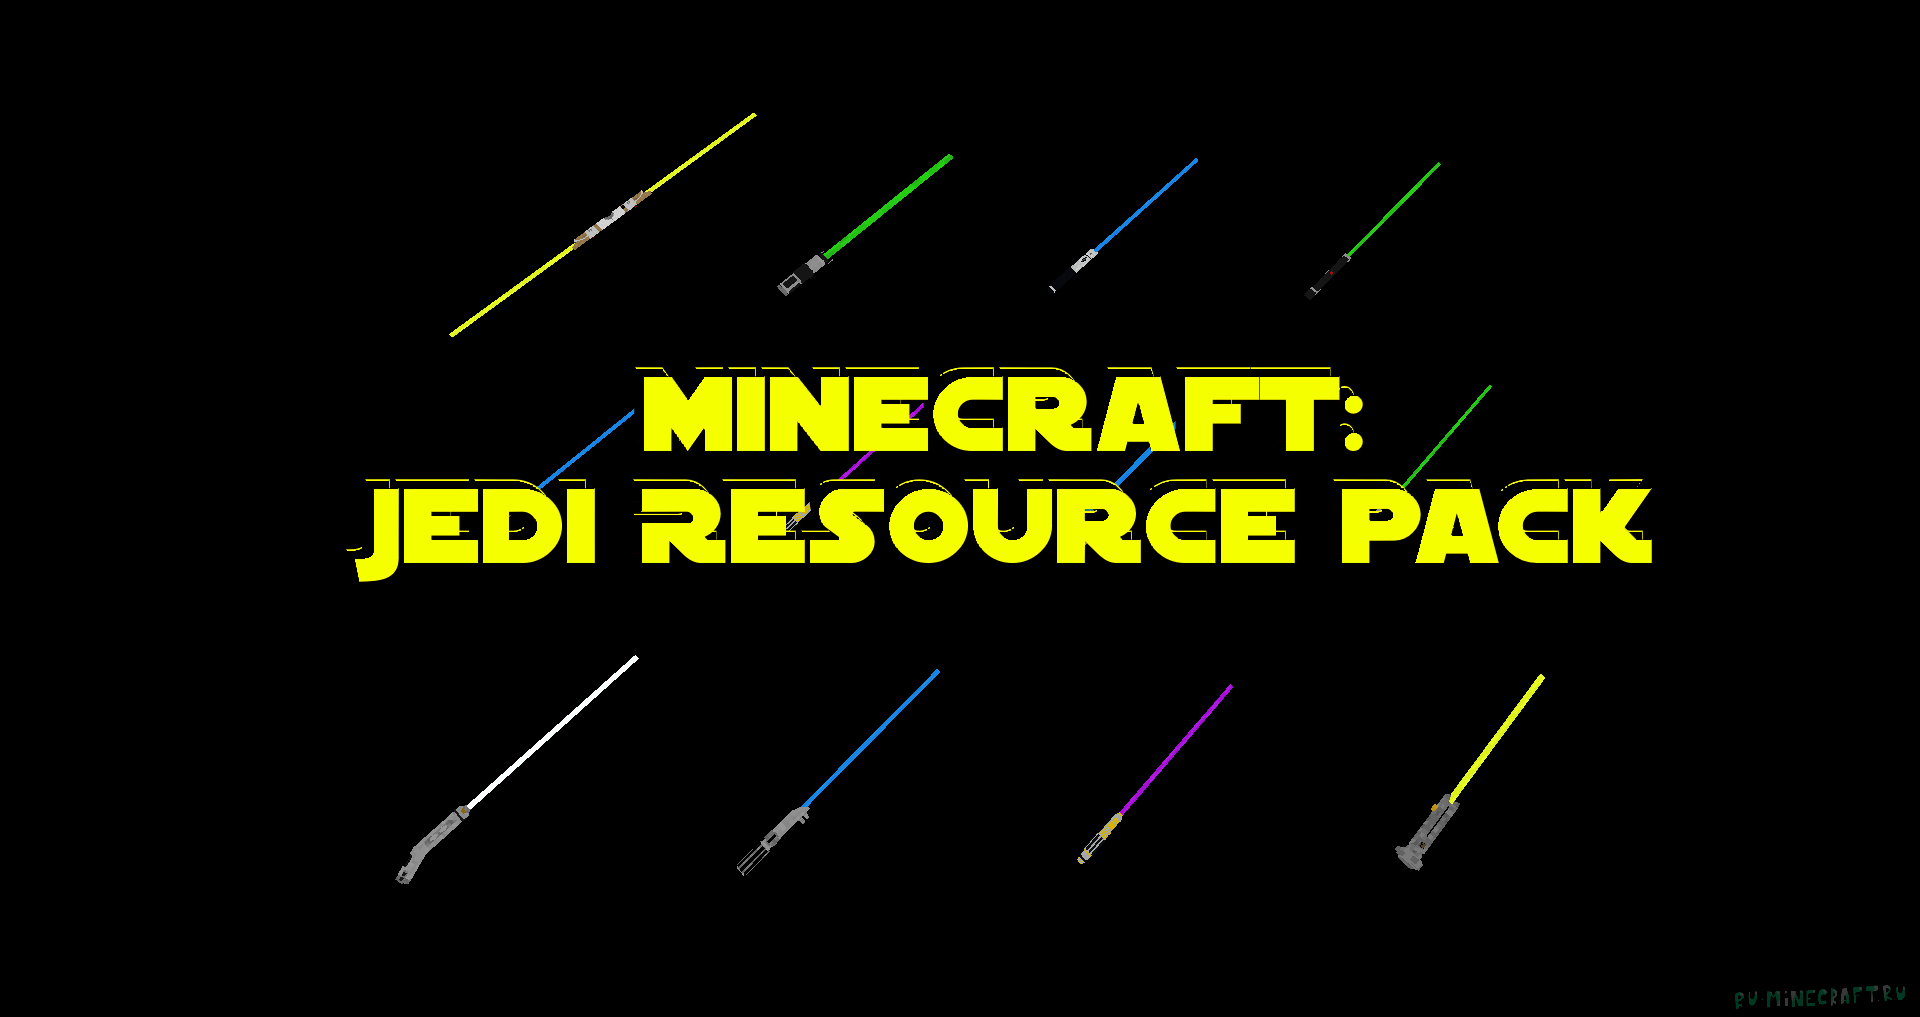 Jedi Resource pack (Lightsabers) - ресурспак на световые мечи из Star Wars  [1.18.1 - 1.11.2] [16x] » Скачать Текстуры для майнкрафт, текстур паки